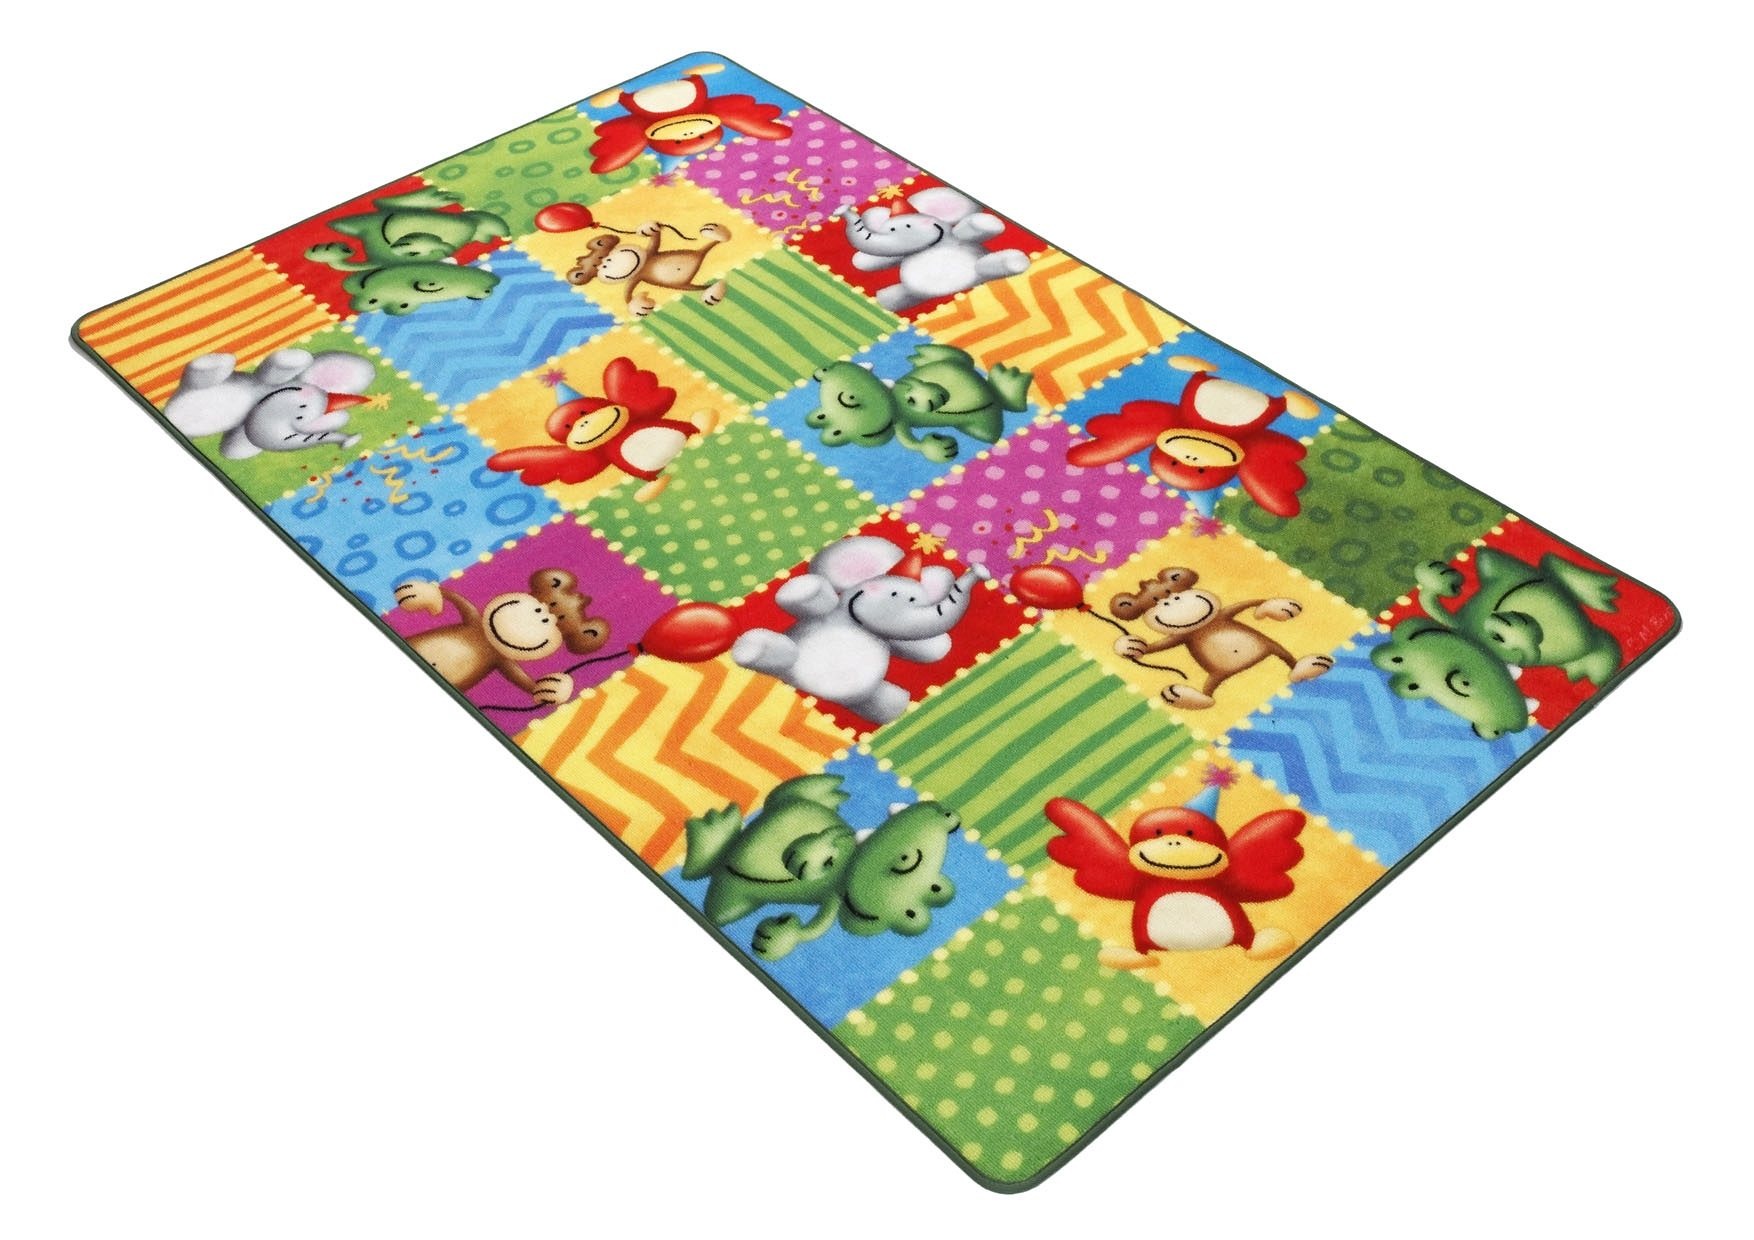 Böing Carpet Fußmatte Schmutzfangmatte, Kids »Lovely LK-5«, rechteckig, Kinderzimmer Motiv Druckteppich, Zootiere